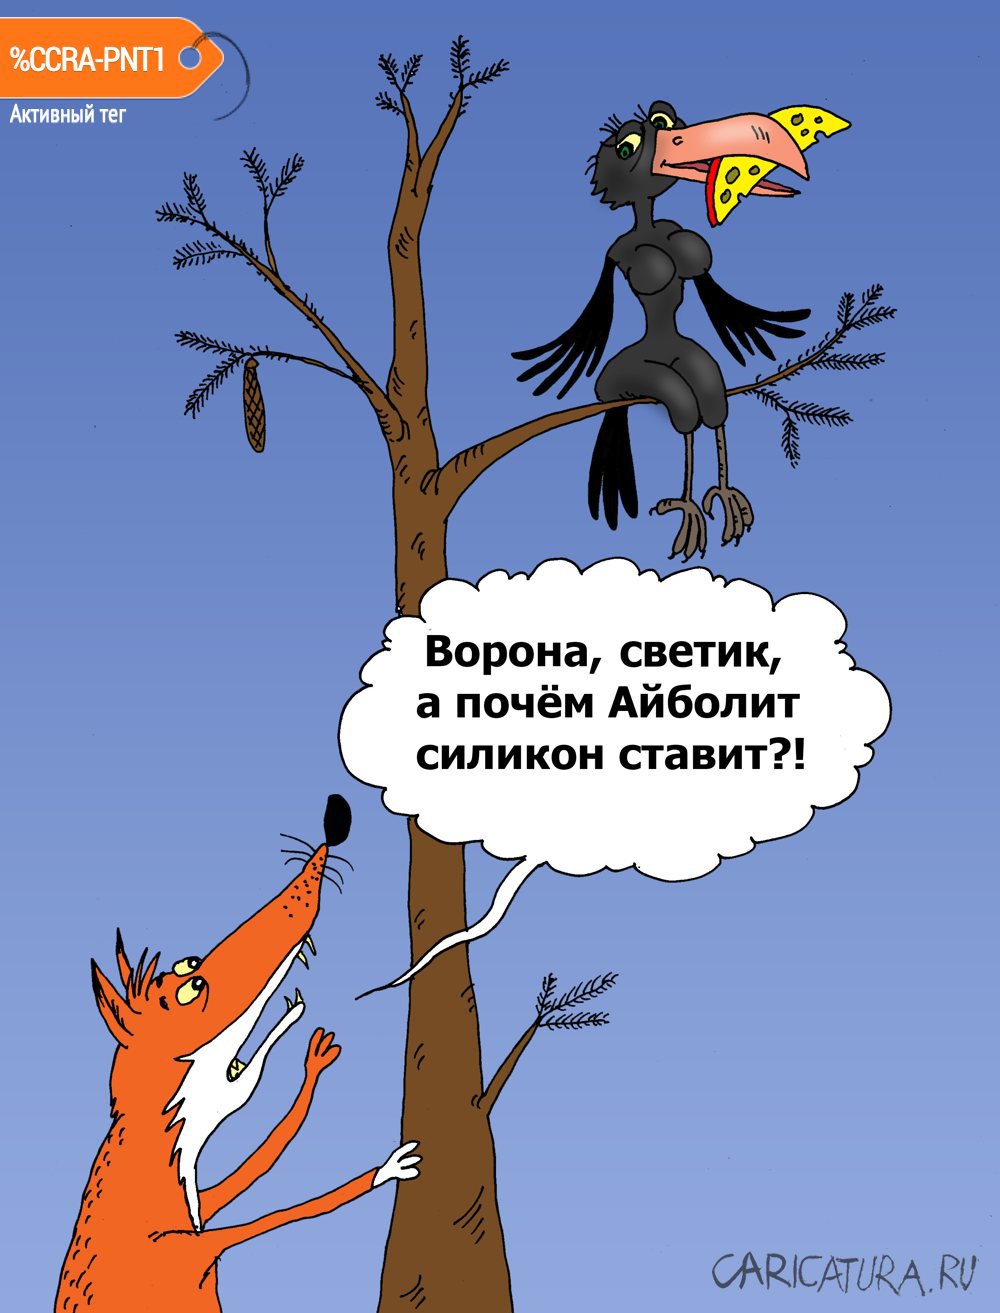 Карикатура "На самом деле", Валерий Тарасенко